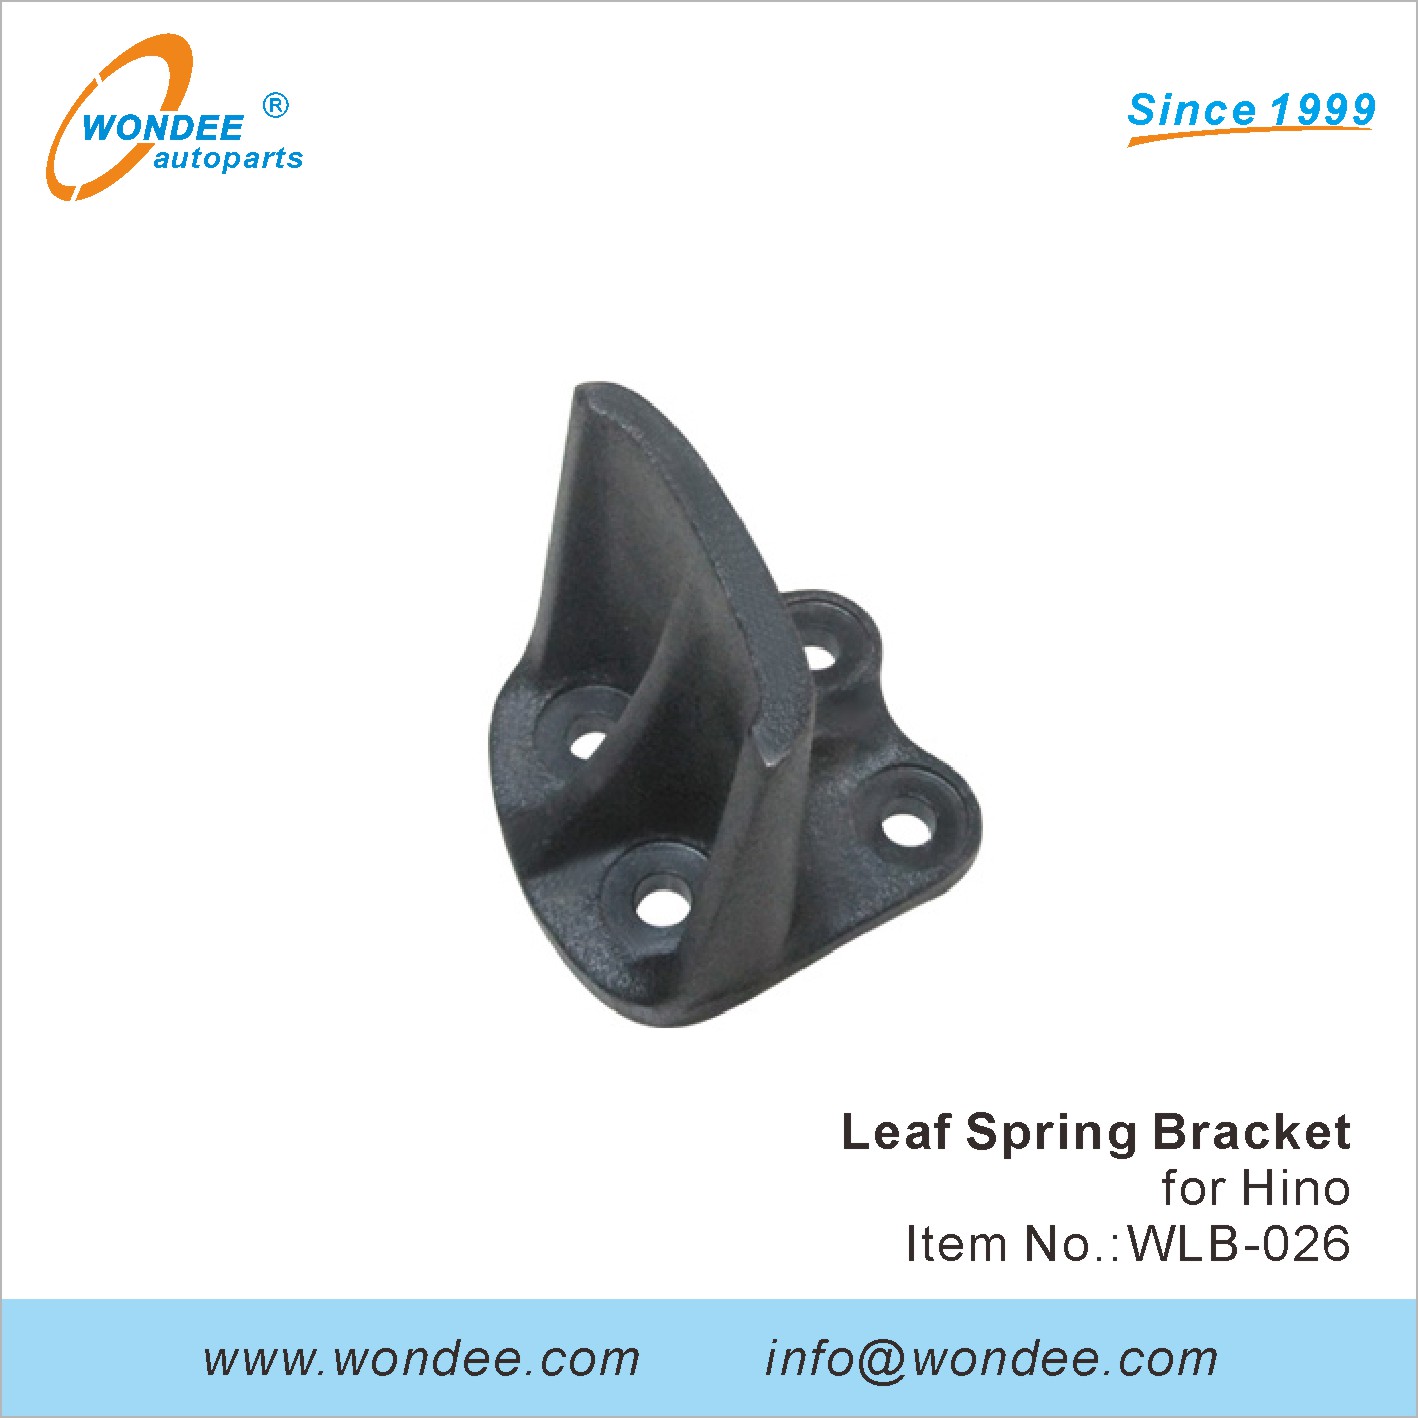 WONDEE leaf spring bracket (26)